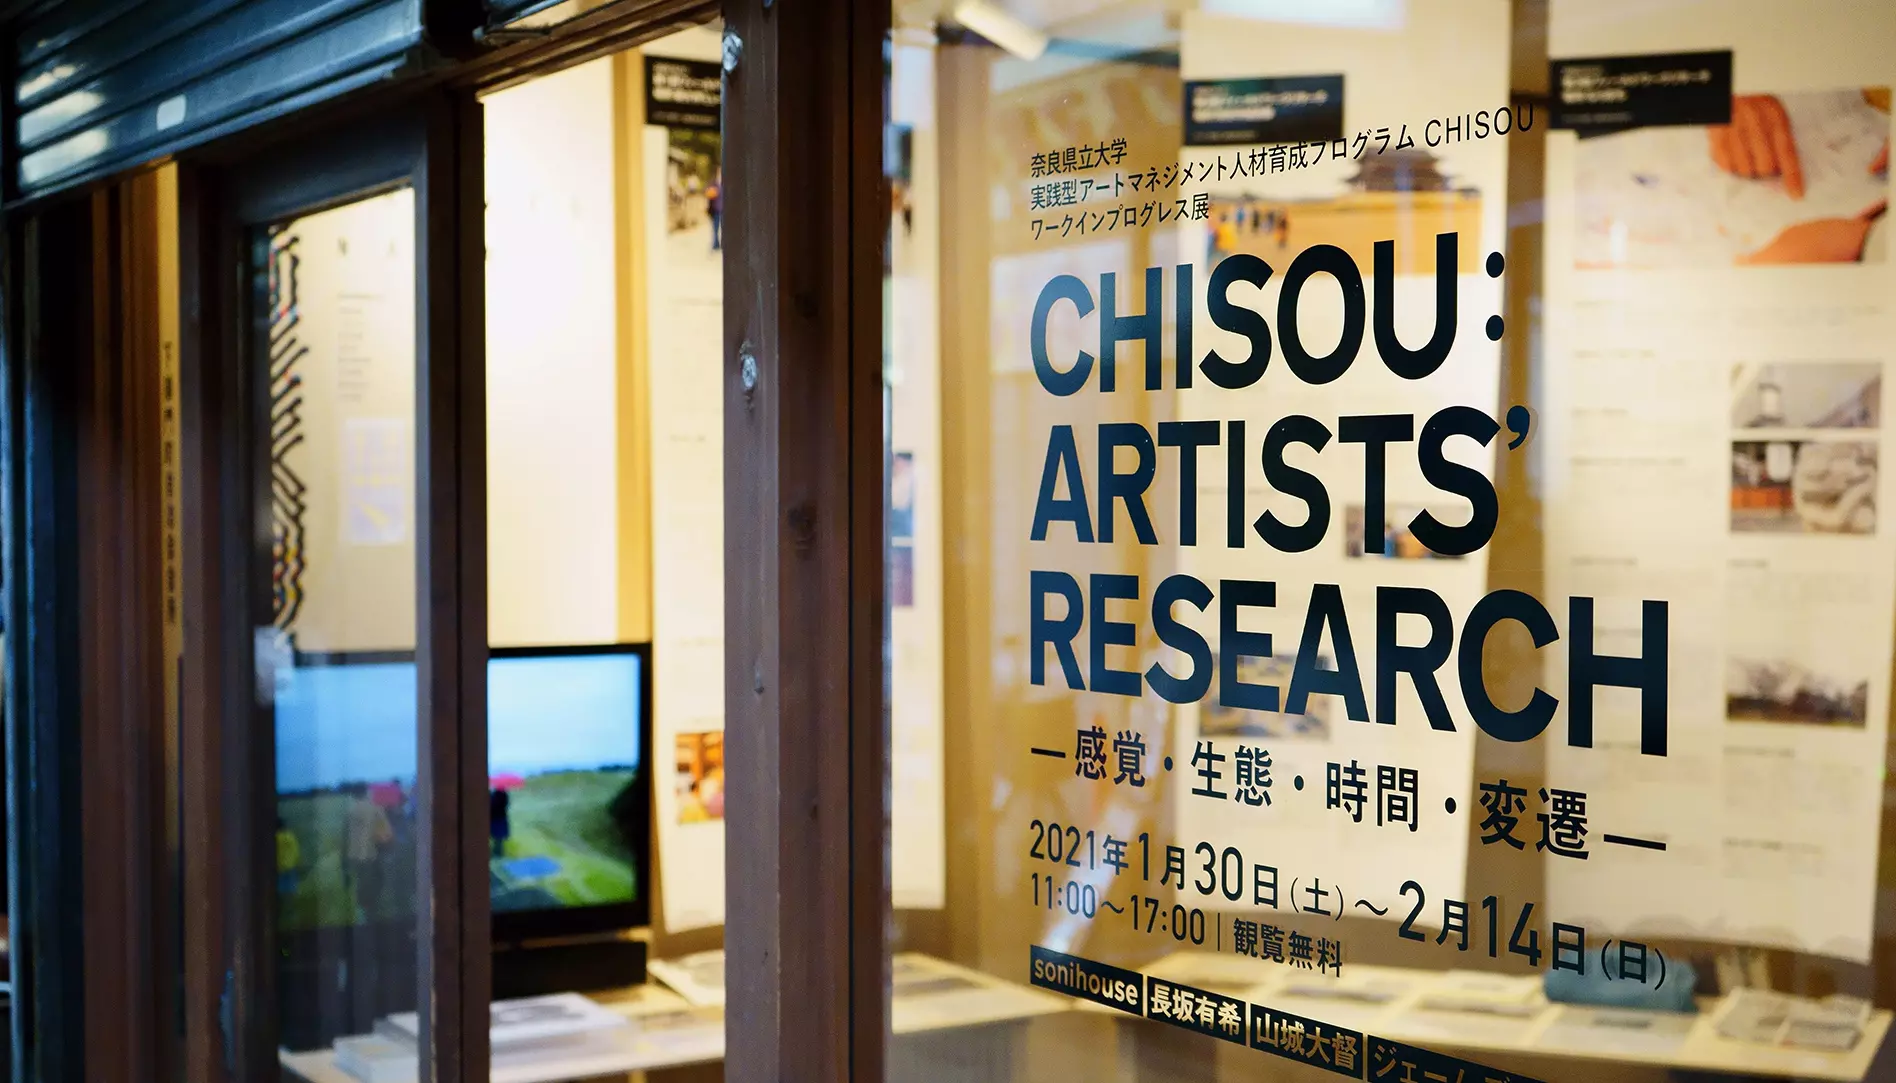 CHISOU: ARTISTS’ RESEARCH展示会場写真